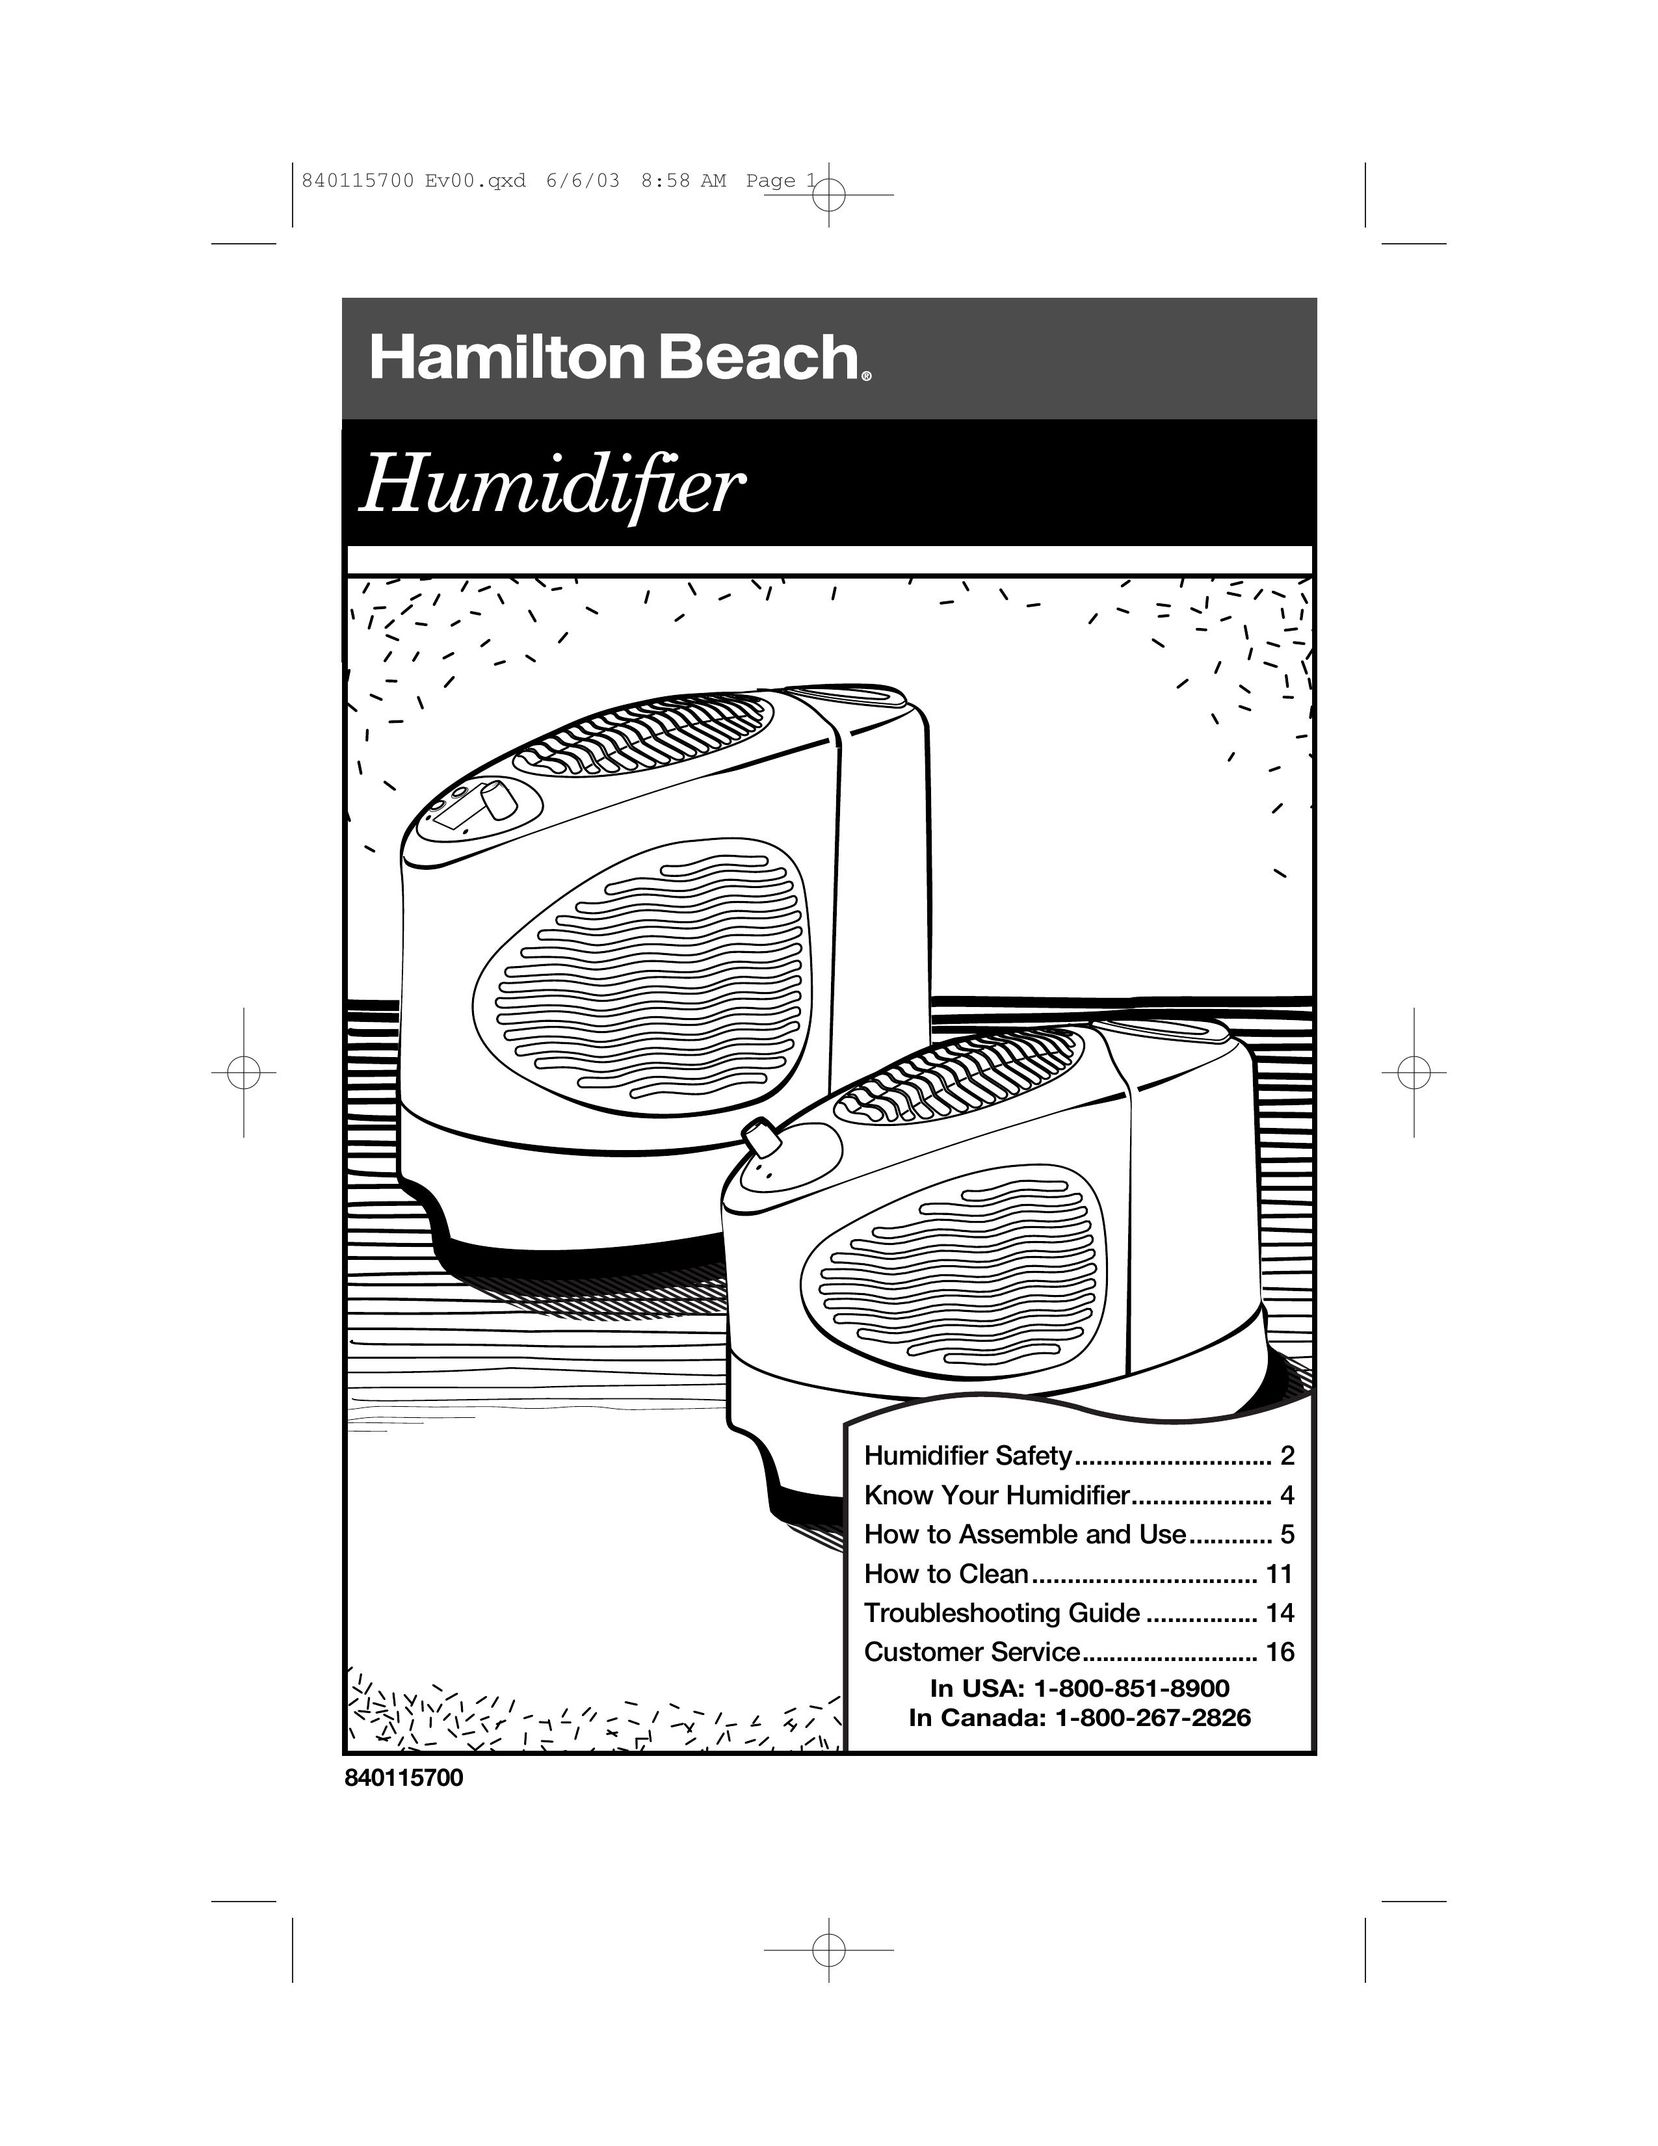 Hamilton Beach 05521 Humidifier User Manual